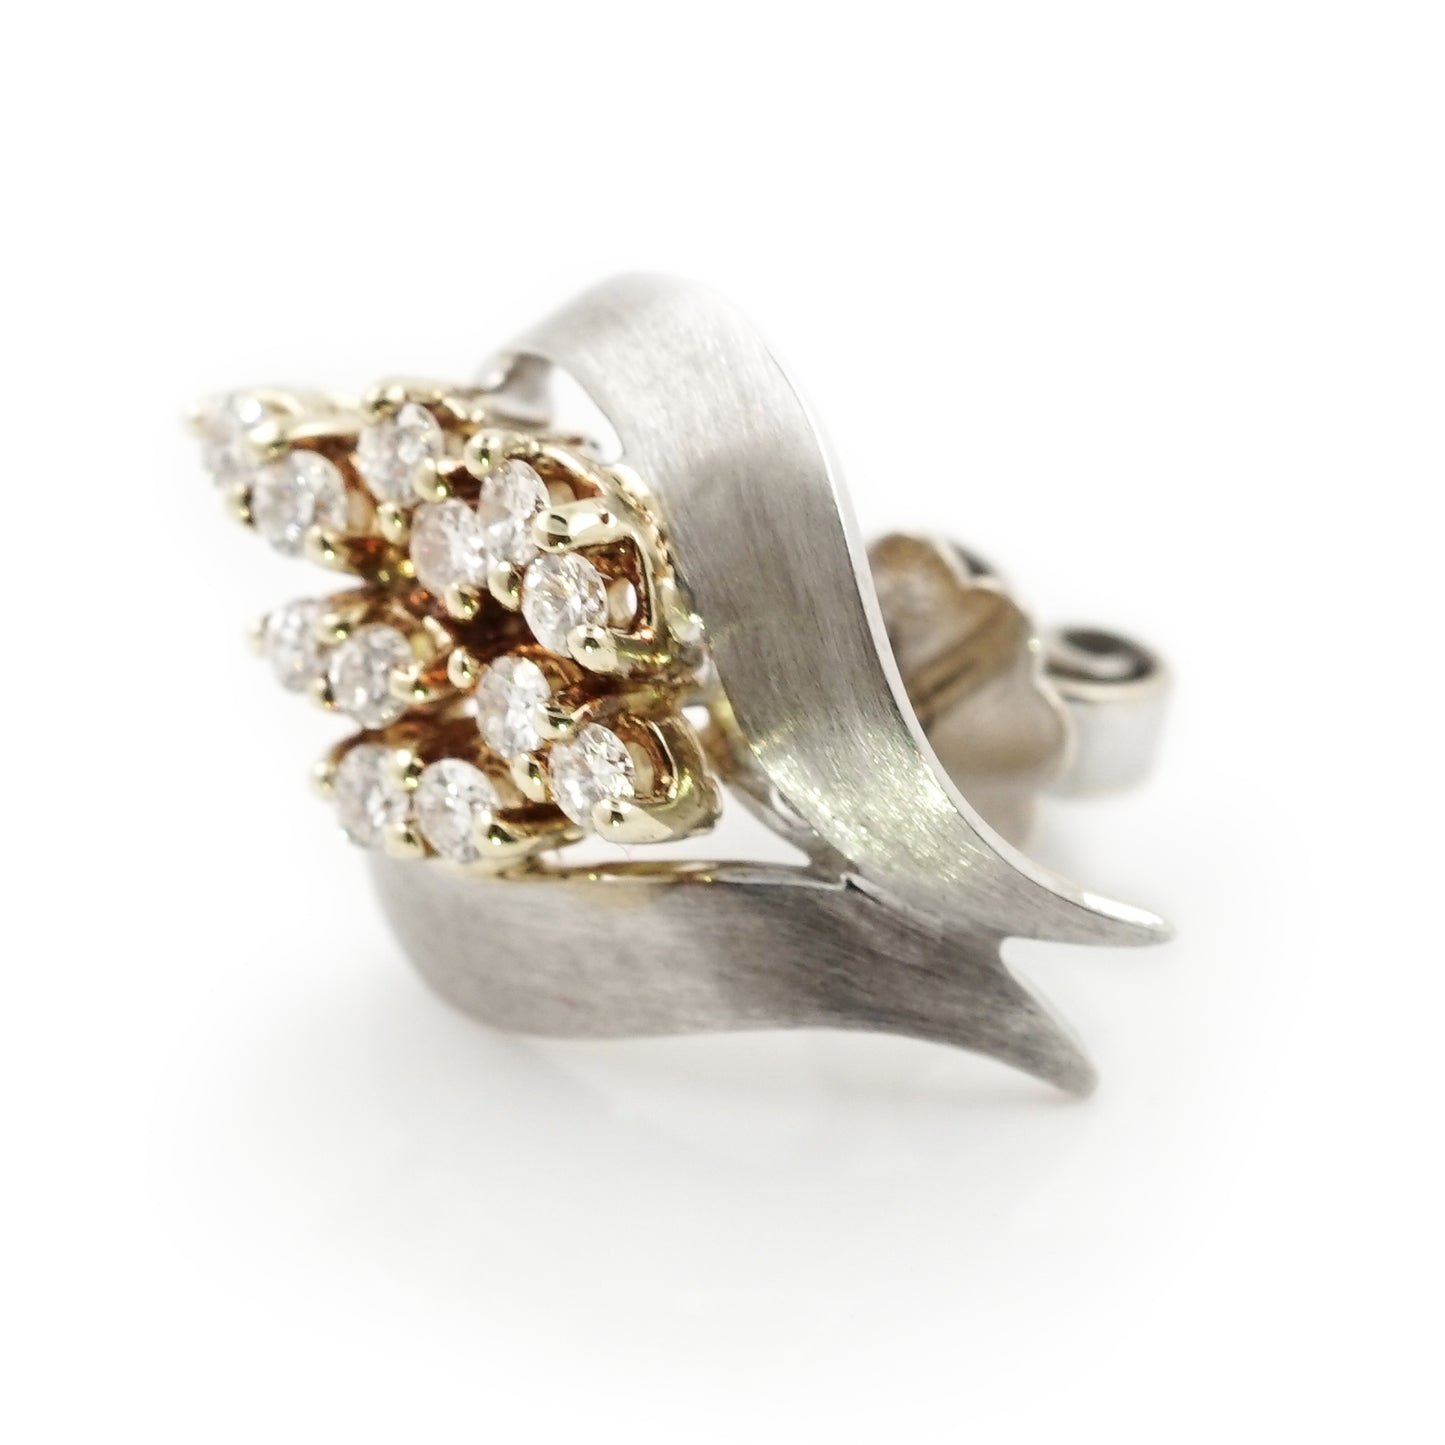 Earrings stud earrings 585 white gold yellow gold bicolor diamond brilliant women's jewelry